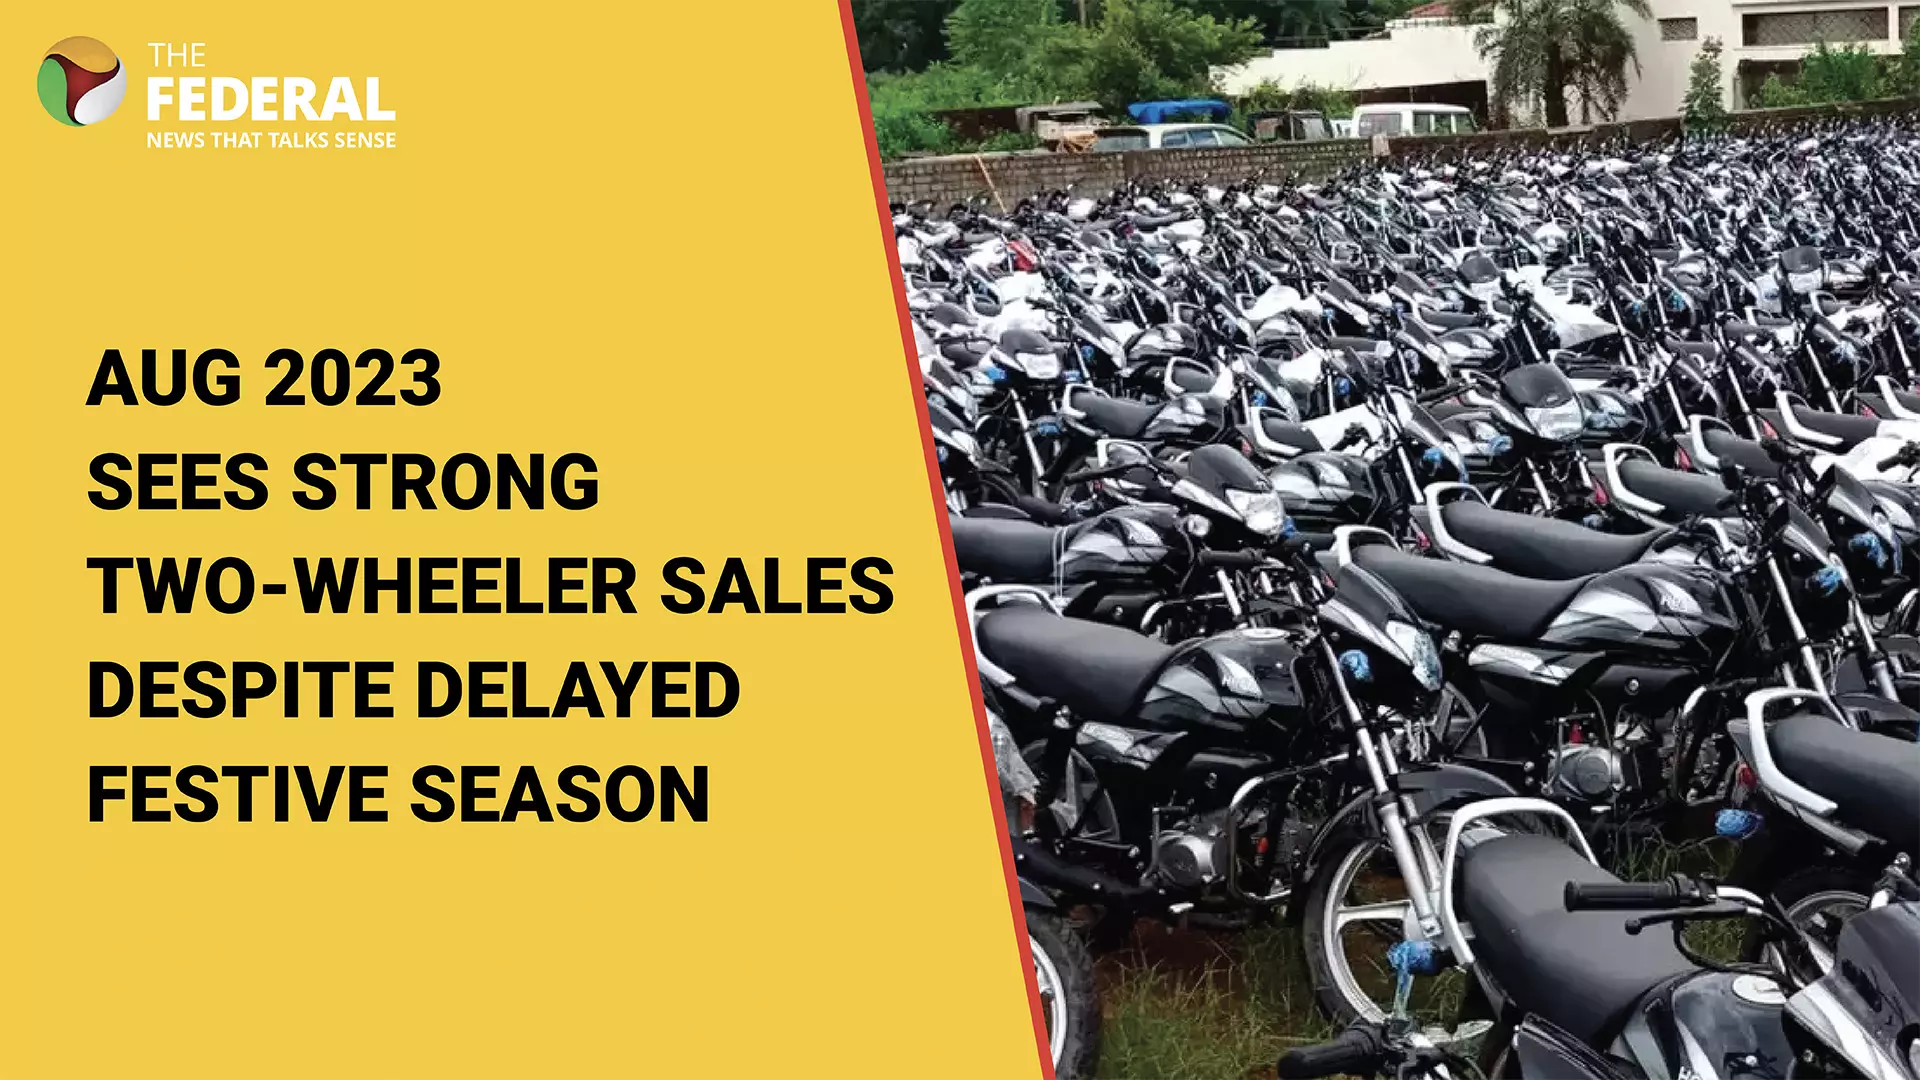 Aug 2023 sees strong two-wheeler sales despite delayed festive season